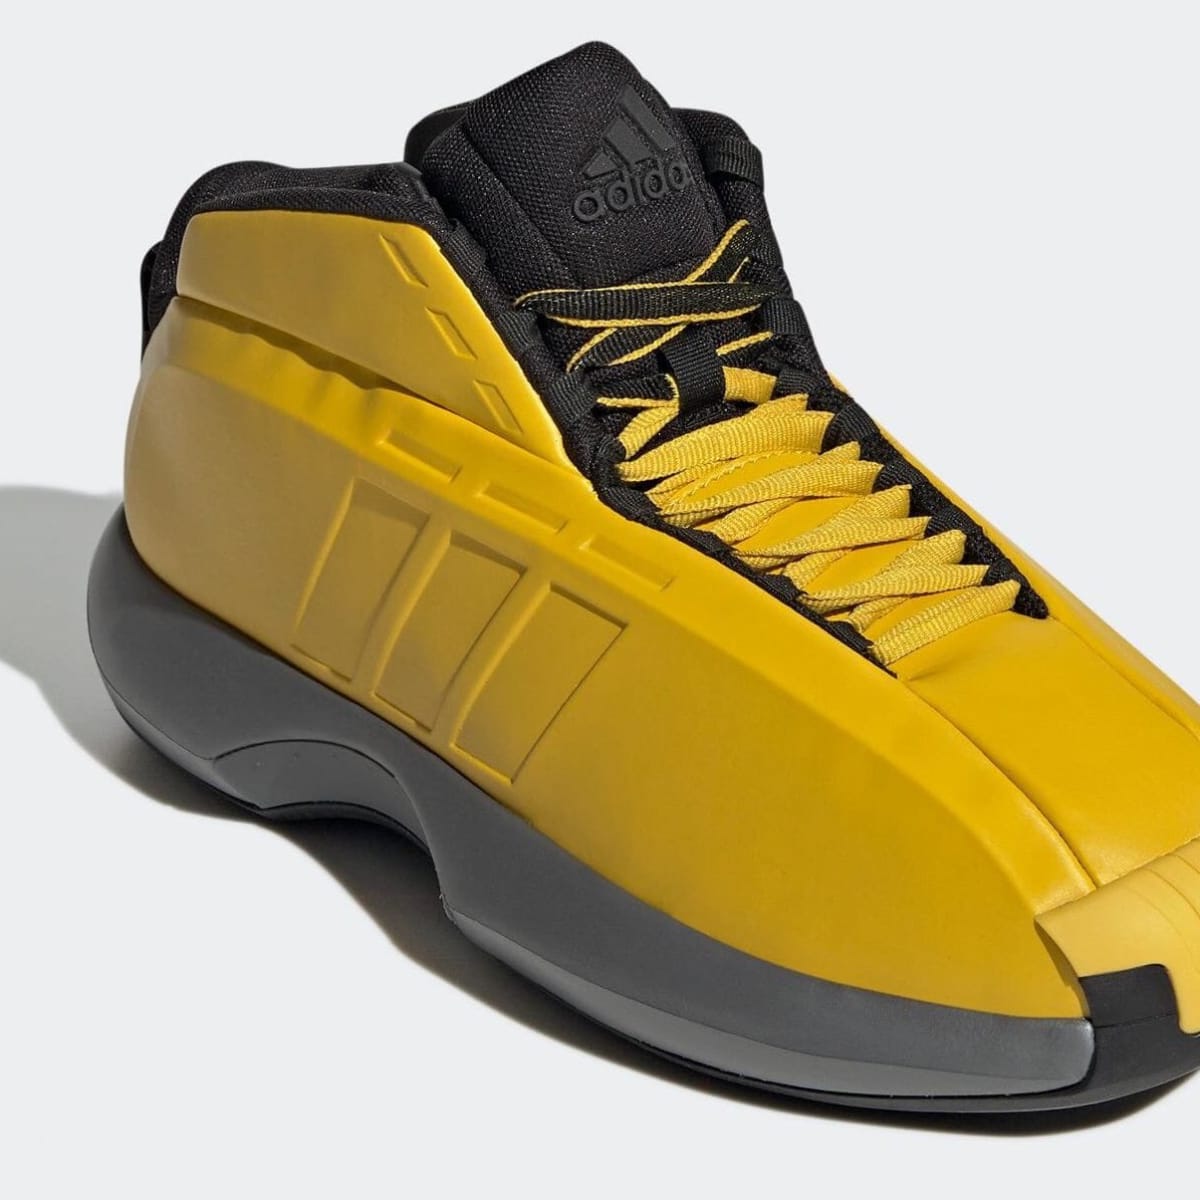 Adidas Bringing Kobe Bryant's Retro Shoes - Sports FanNation Kicks News, Analysis and More